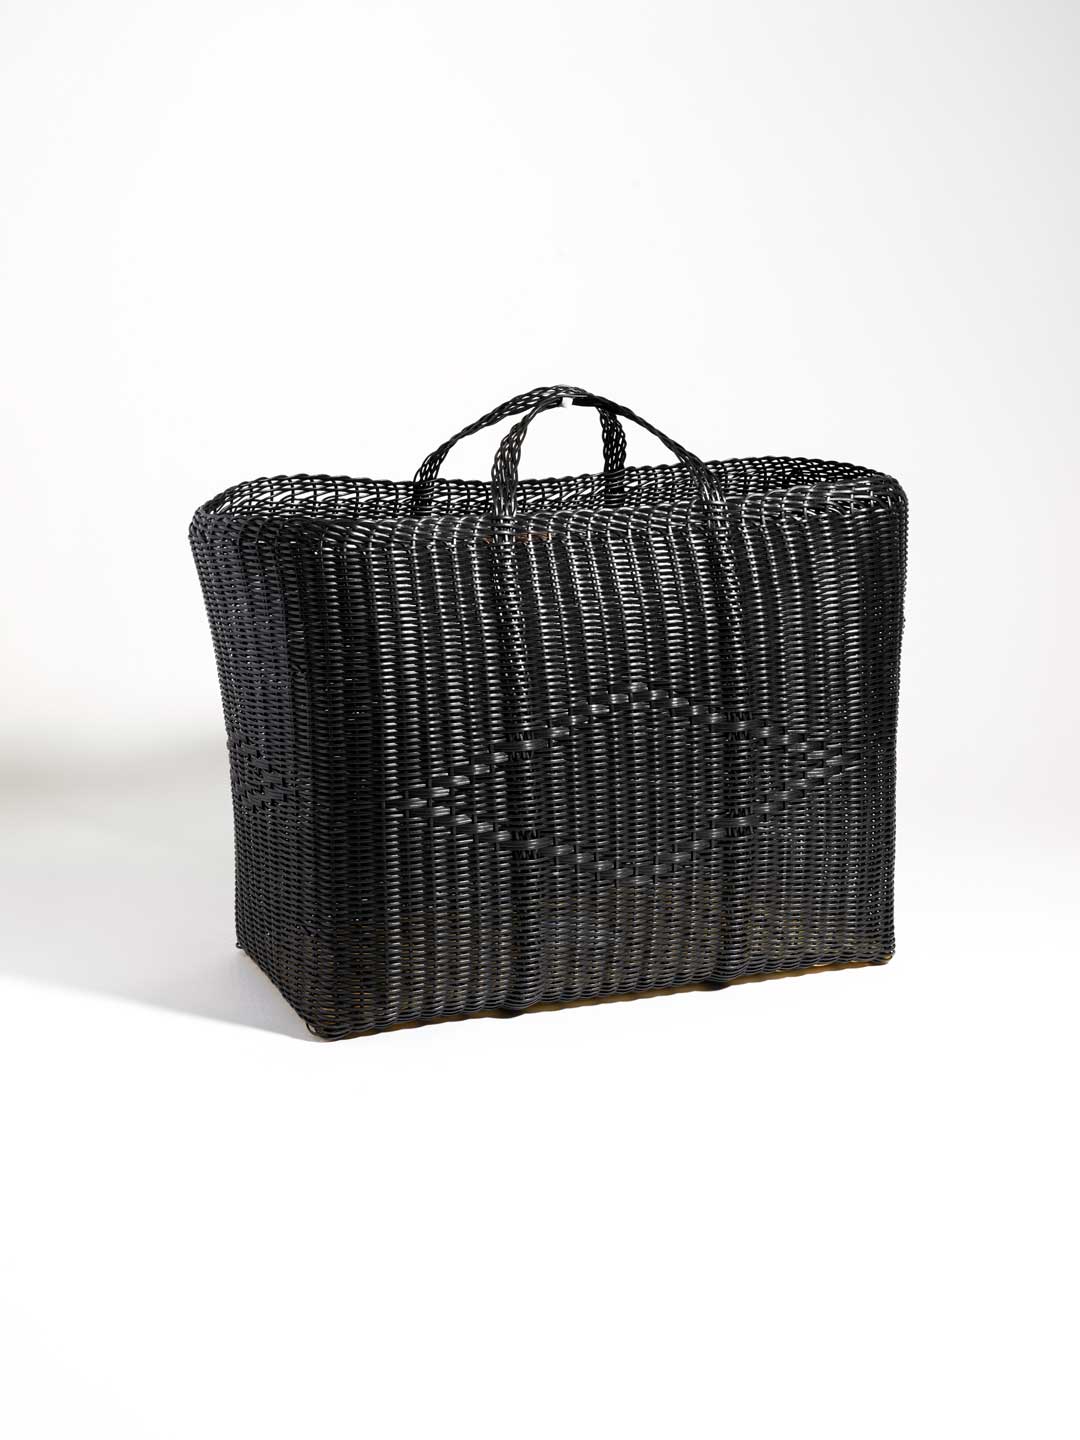 BASKET Bag XL - Black